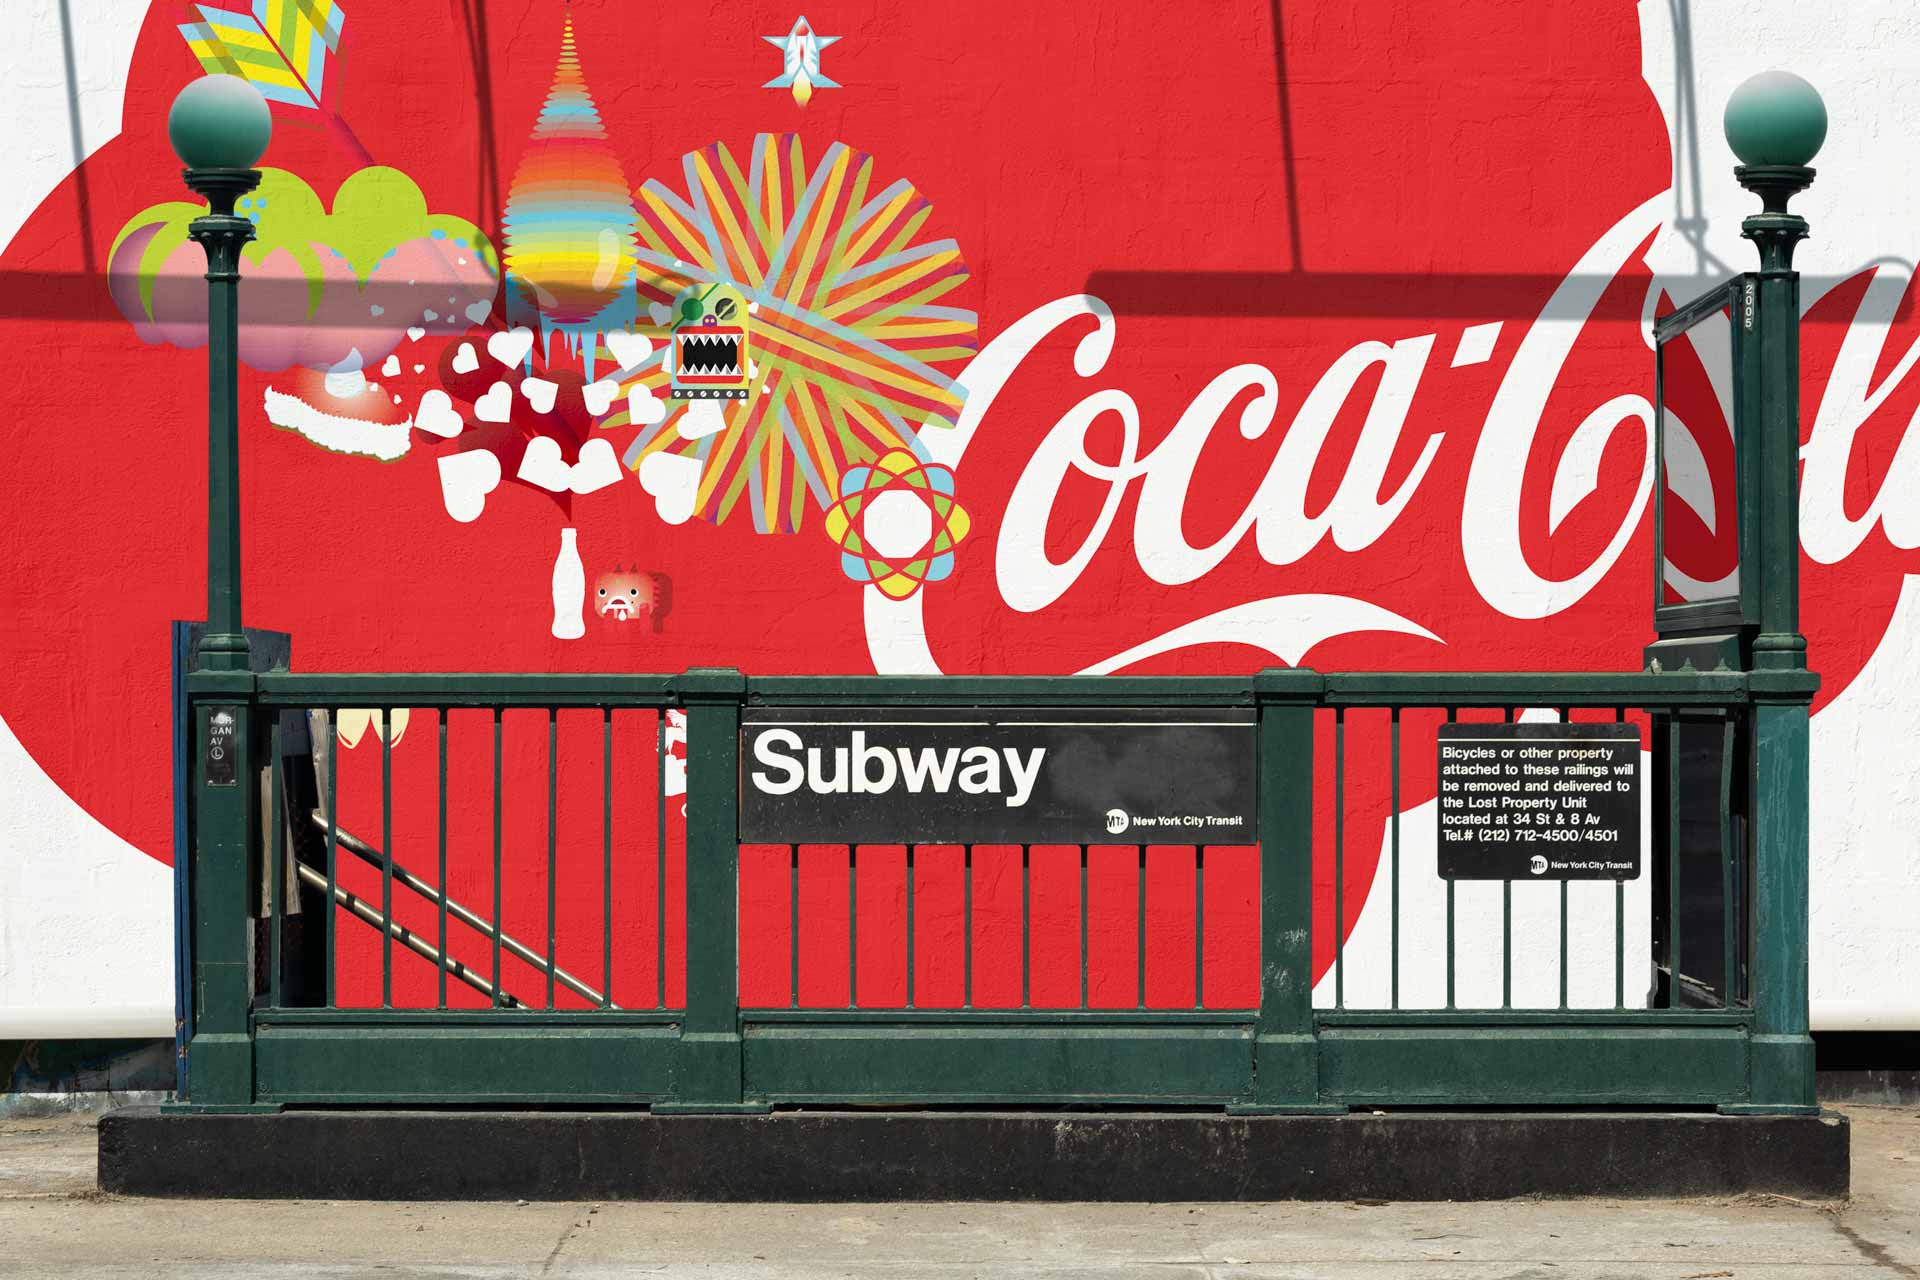 Coca-Cola mural